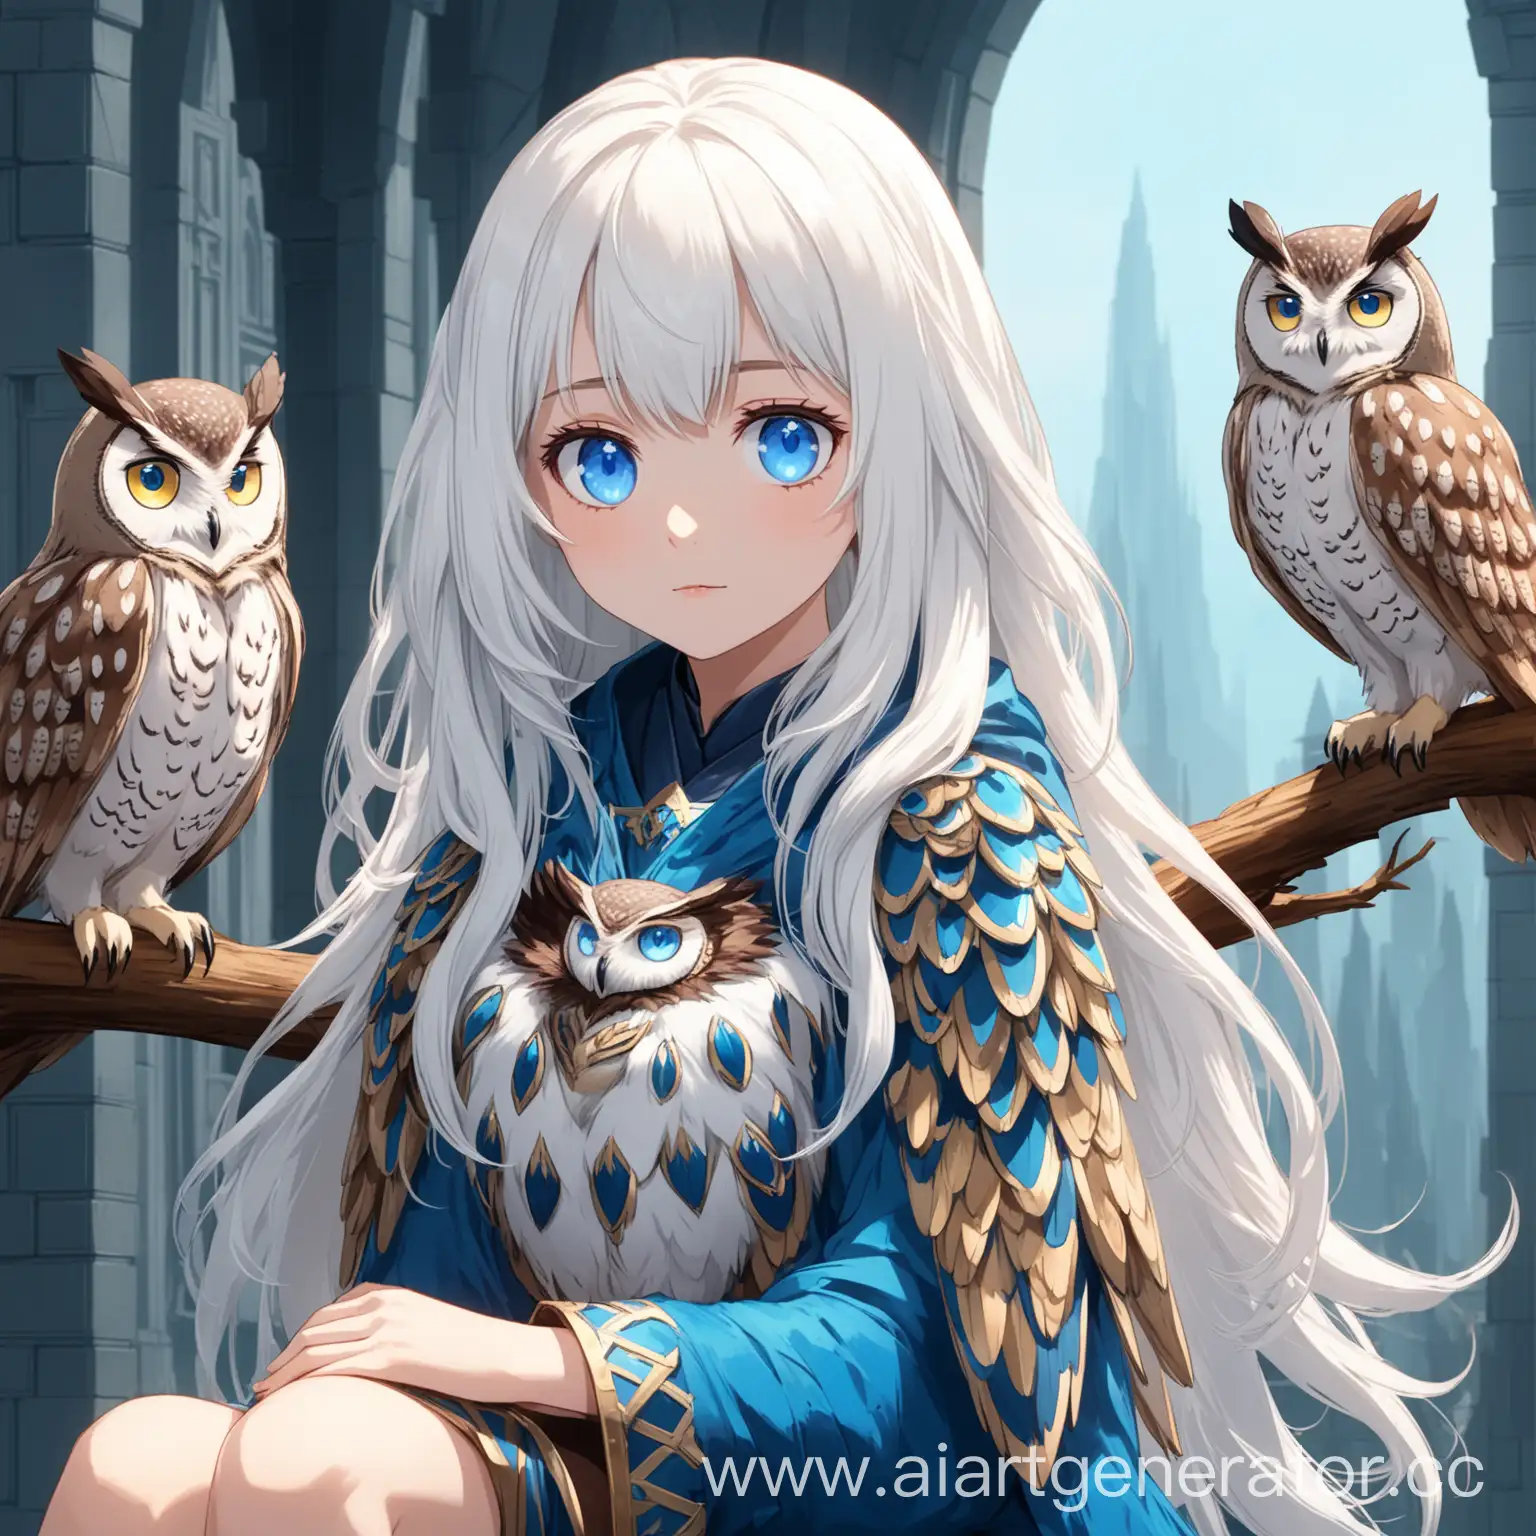 girl with long white hair, blue eyes, medium build, an owl sitting on her arm